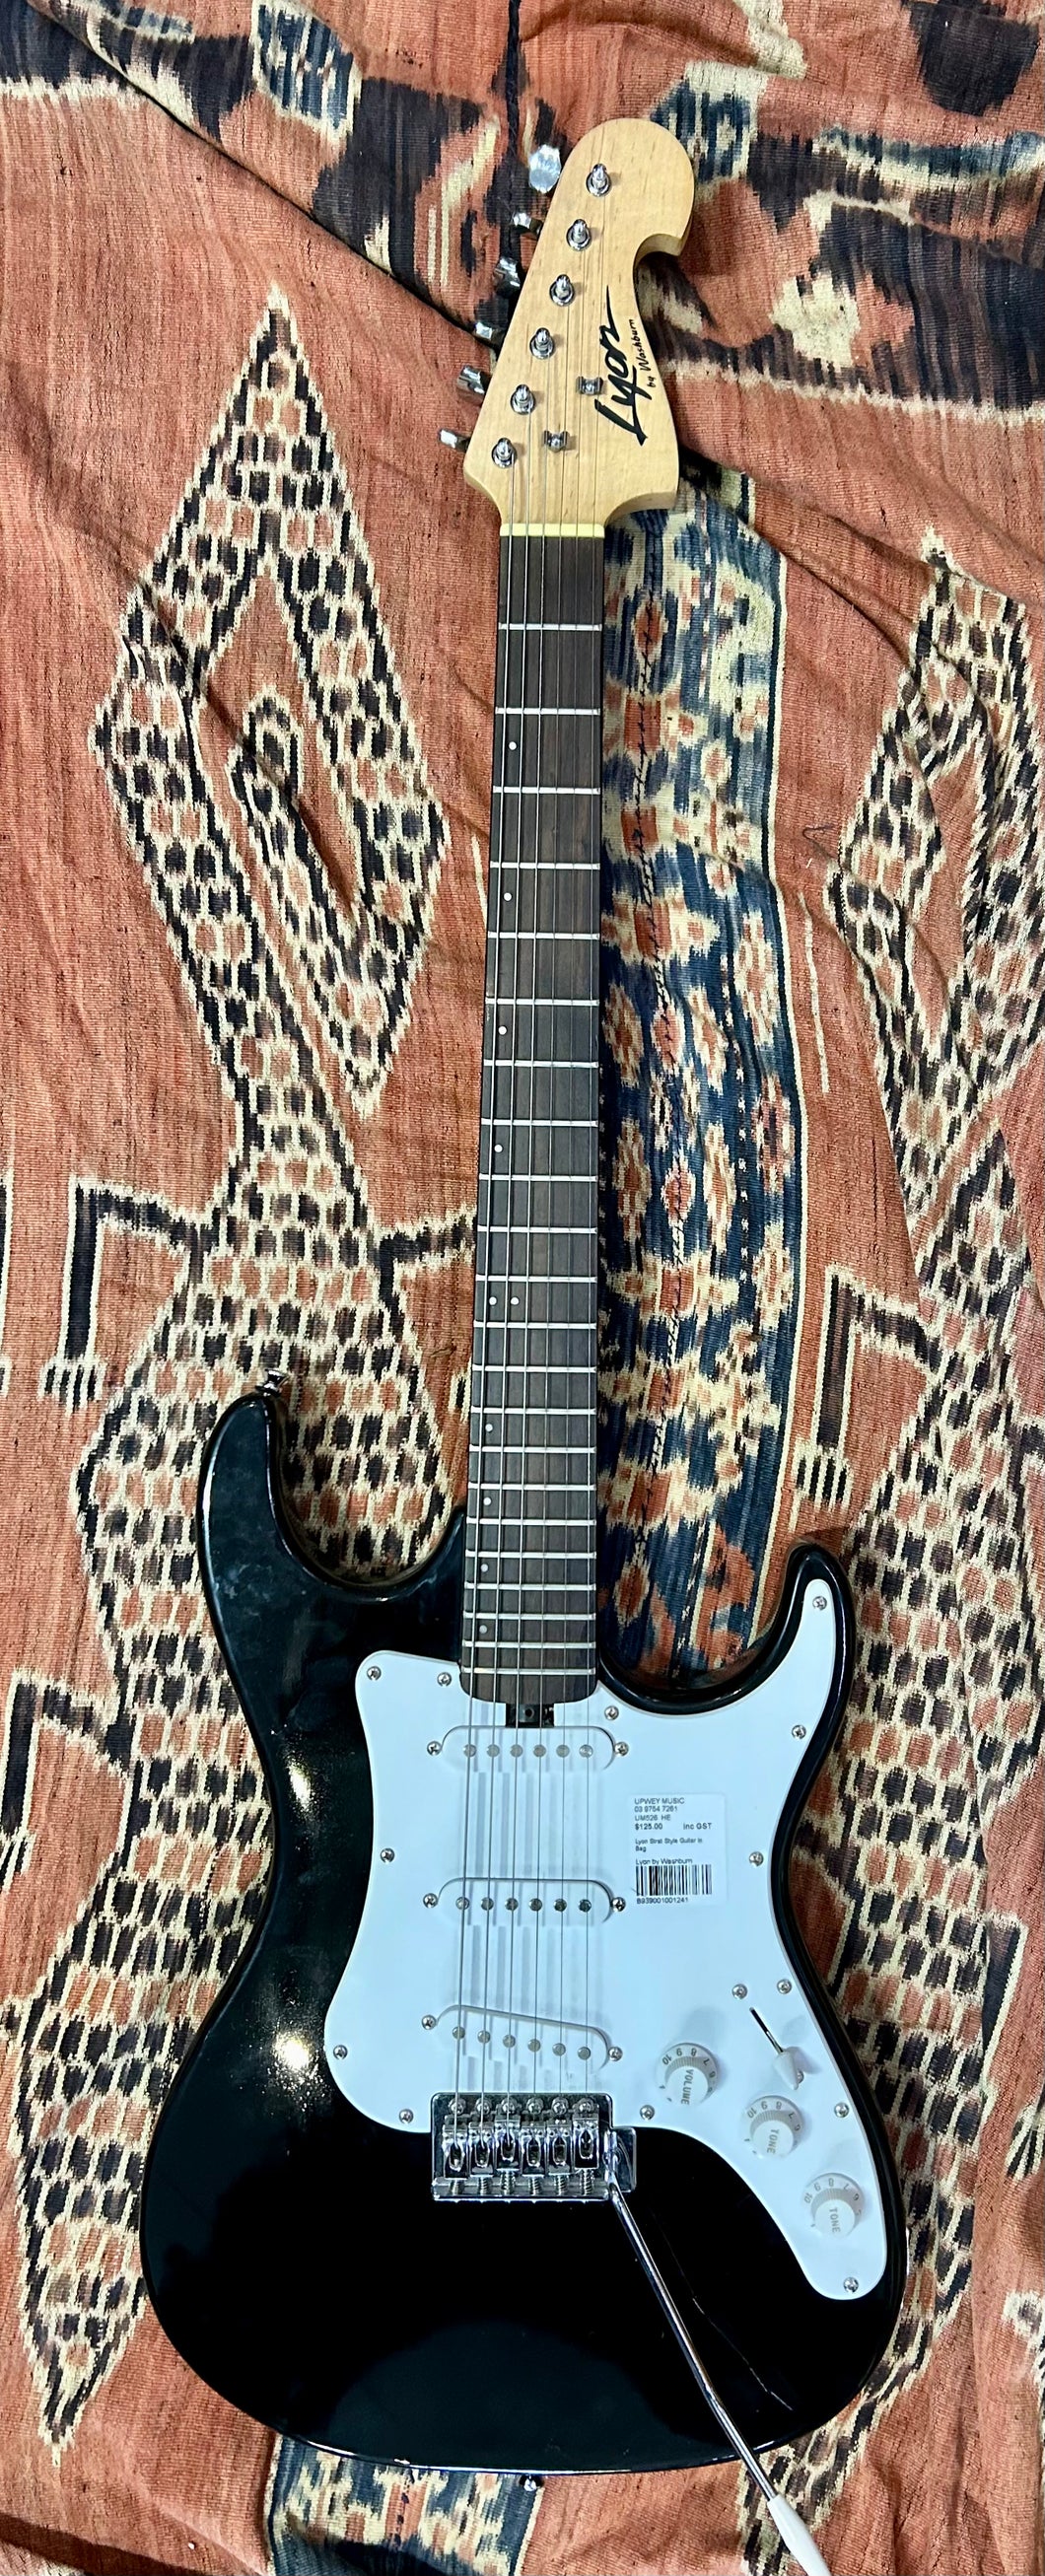 Lyon Strat Style Guitar in Bag